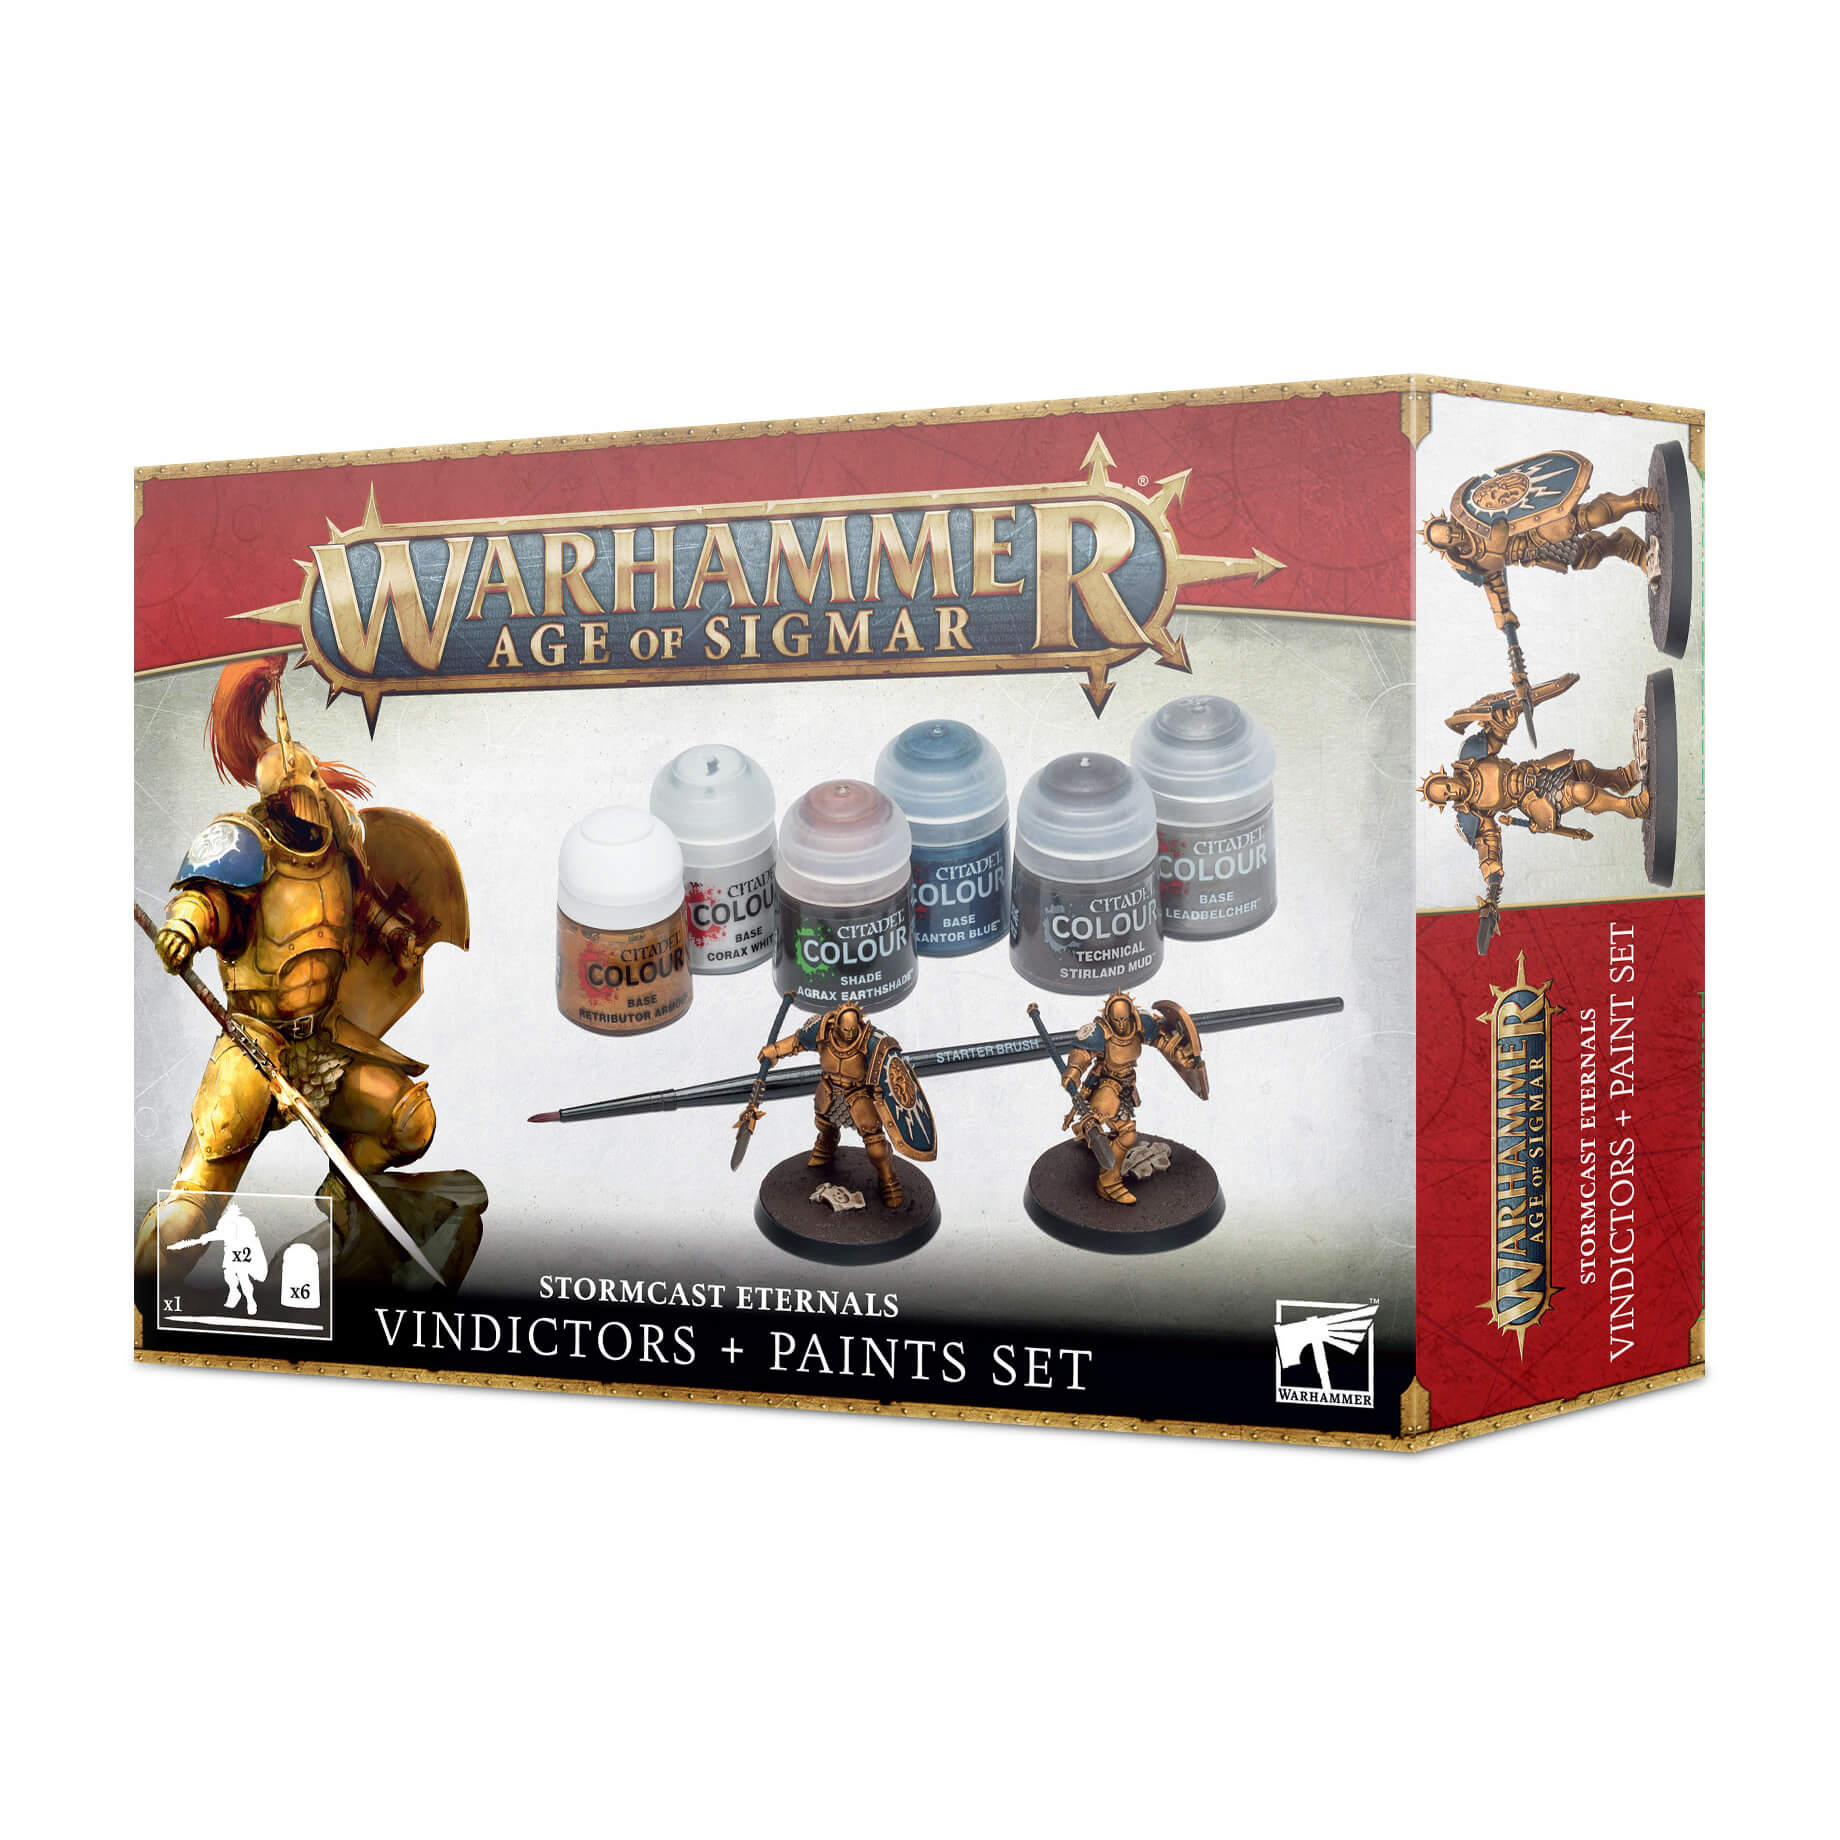 Warhammer Age of Sigmar Stormcast Eternals Vindictors and Paint Set